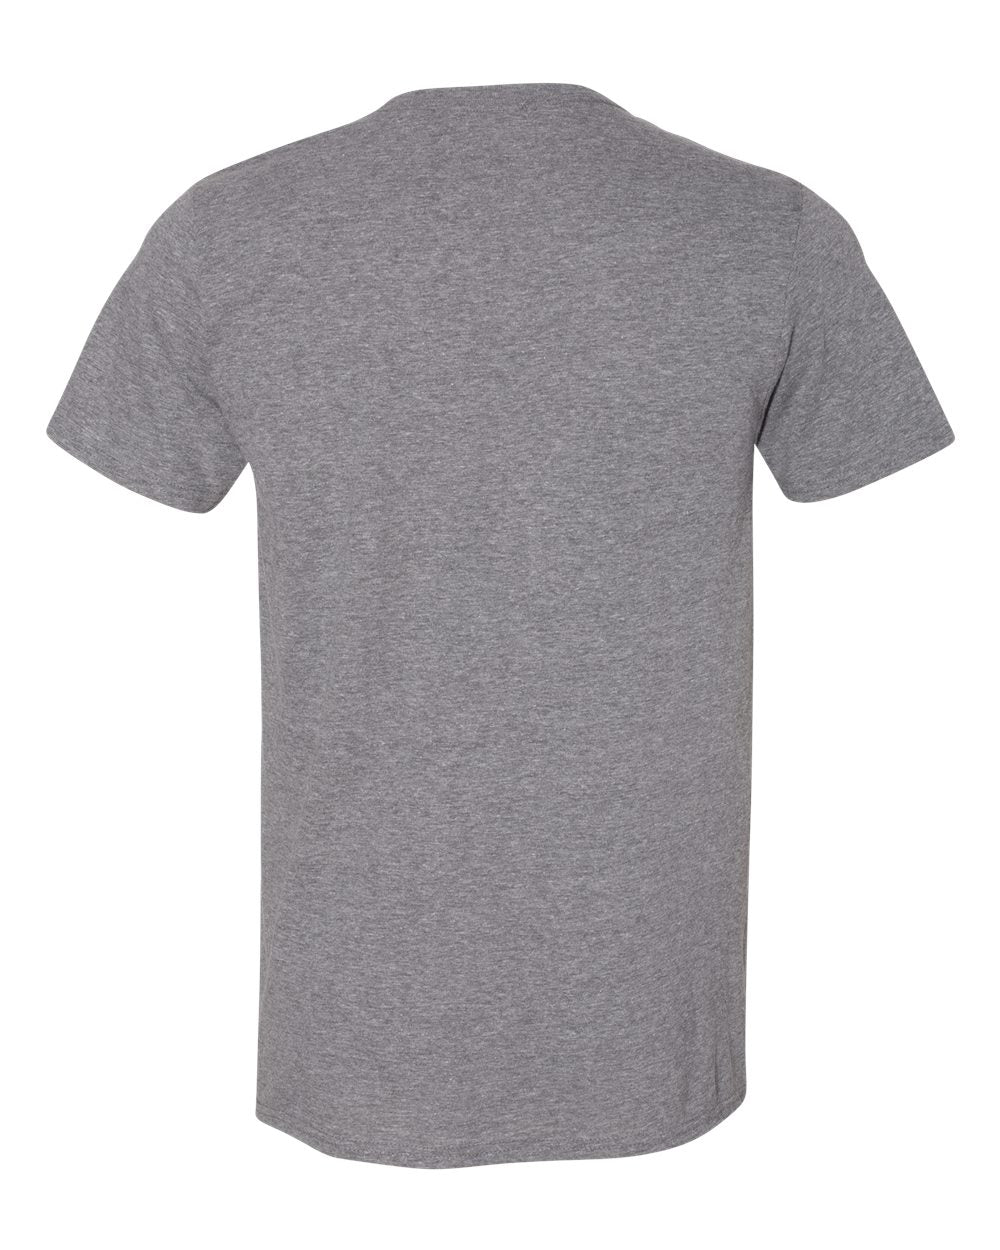 Gildan Softstyle® T-Shirt 64000 #color_Graphite Heather